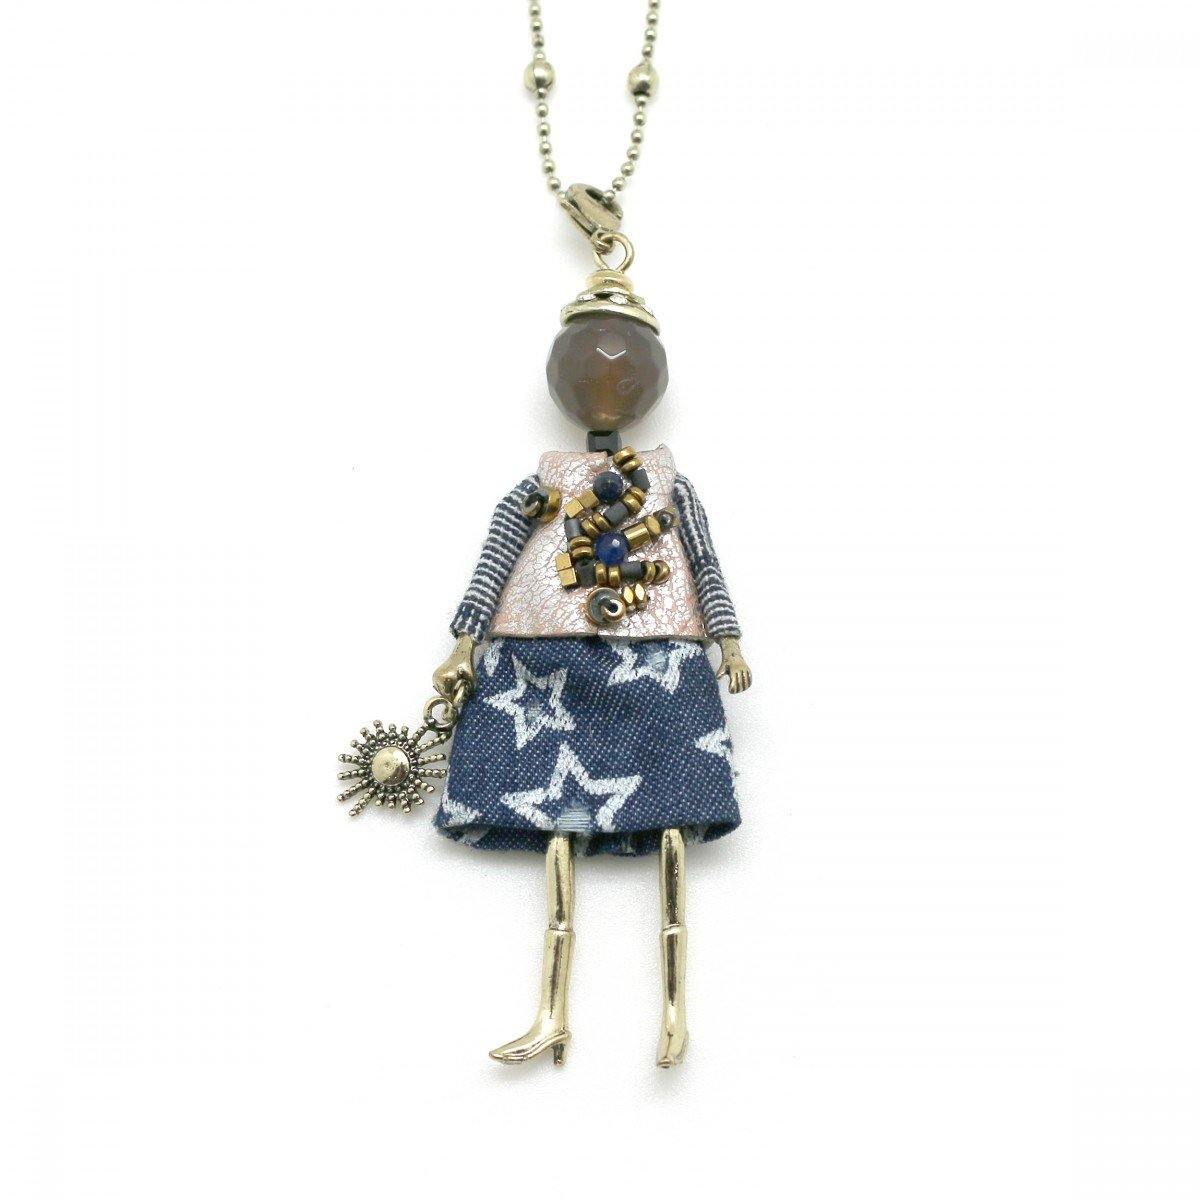 Moon C Small Doll Pendant on a Long Chain, Natural Stone, Fabric, Metal / Blue / 3 Inches / Gift Idea - JOYasForYou